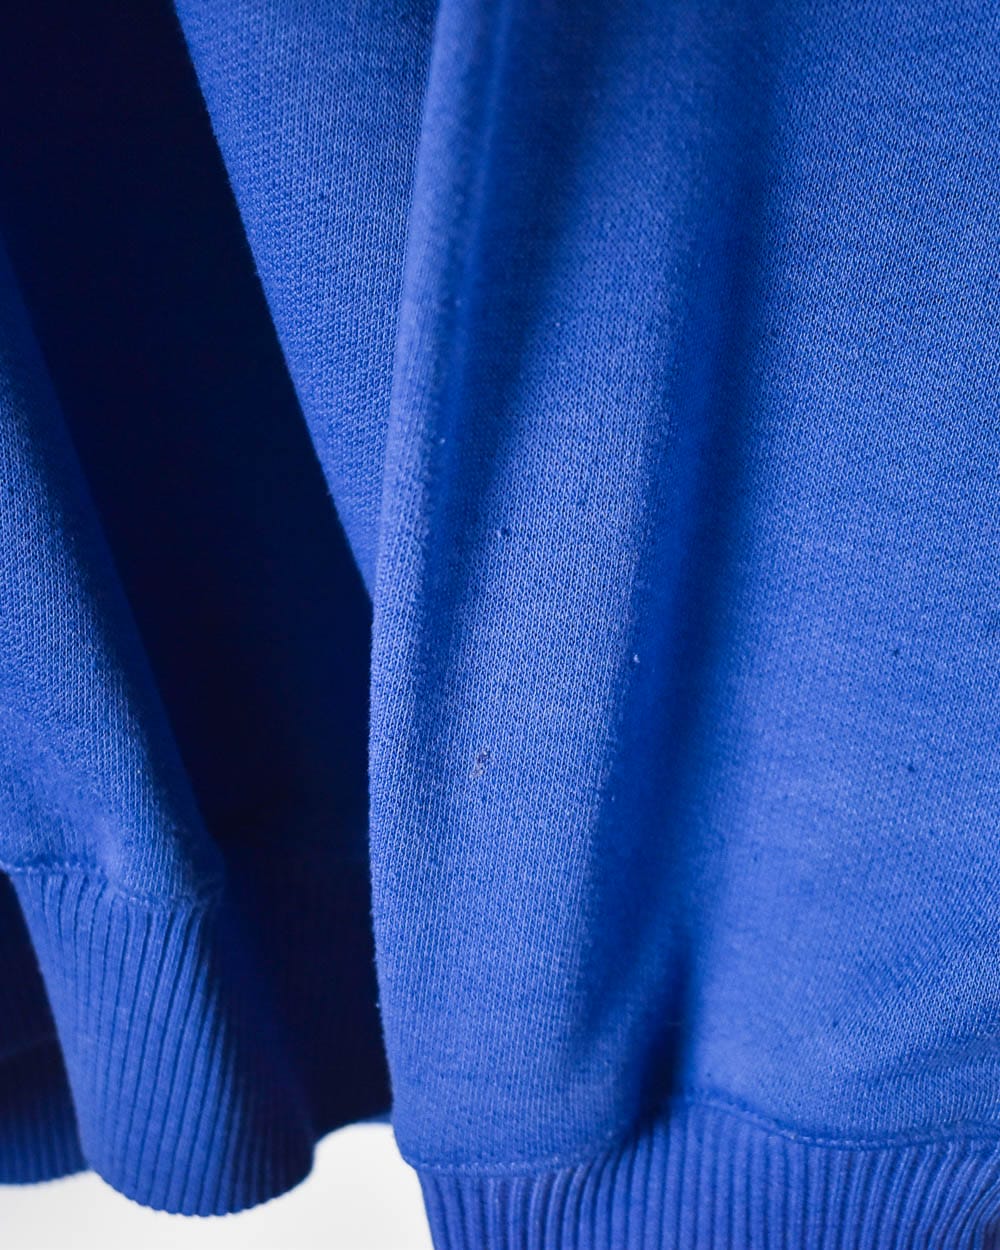 Blue Puma Collared Sweatshirt - Small